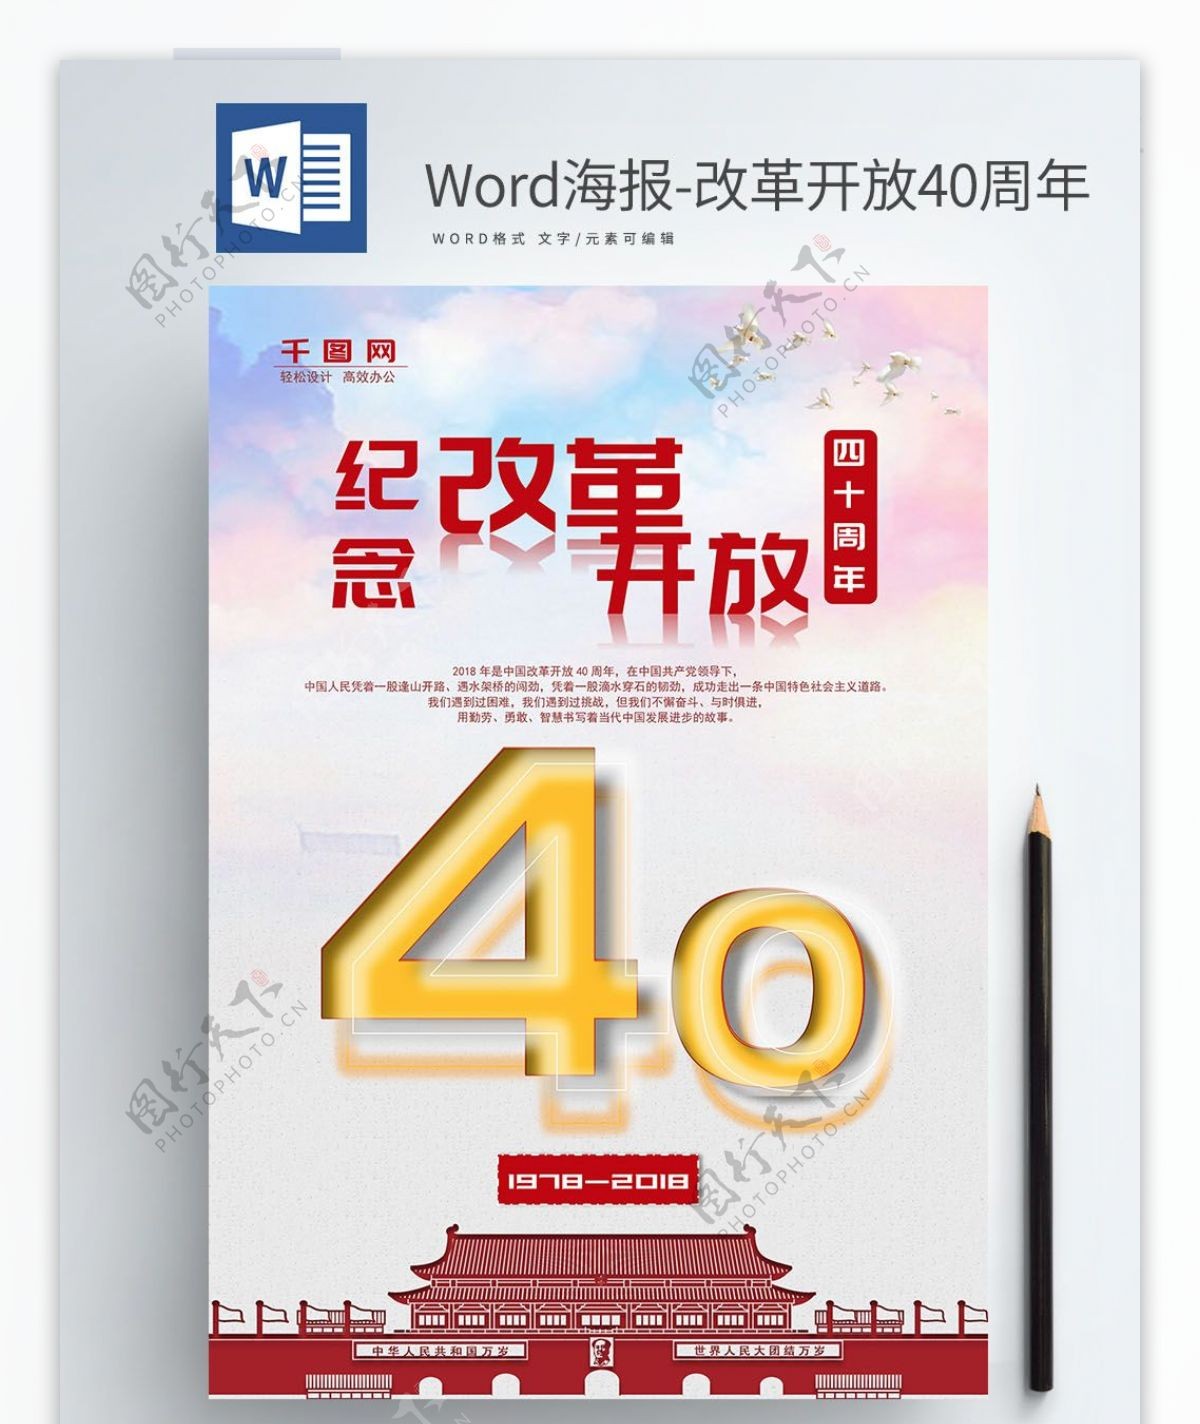 Word海报改革开放40周年